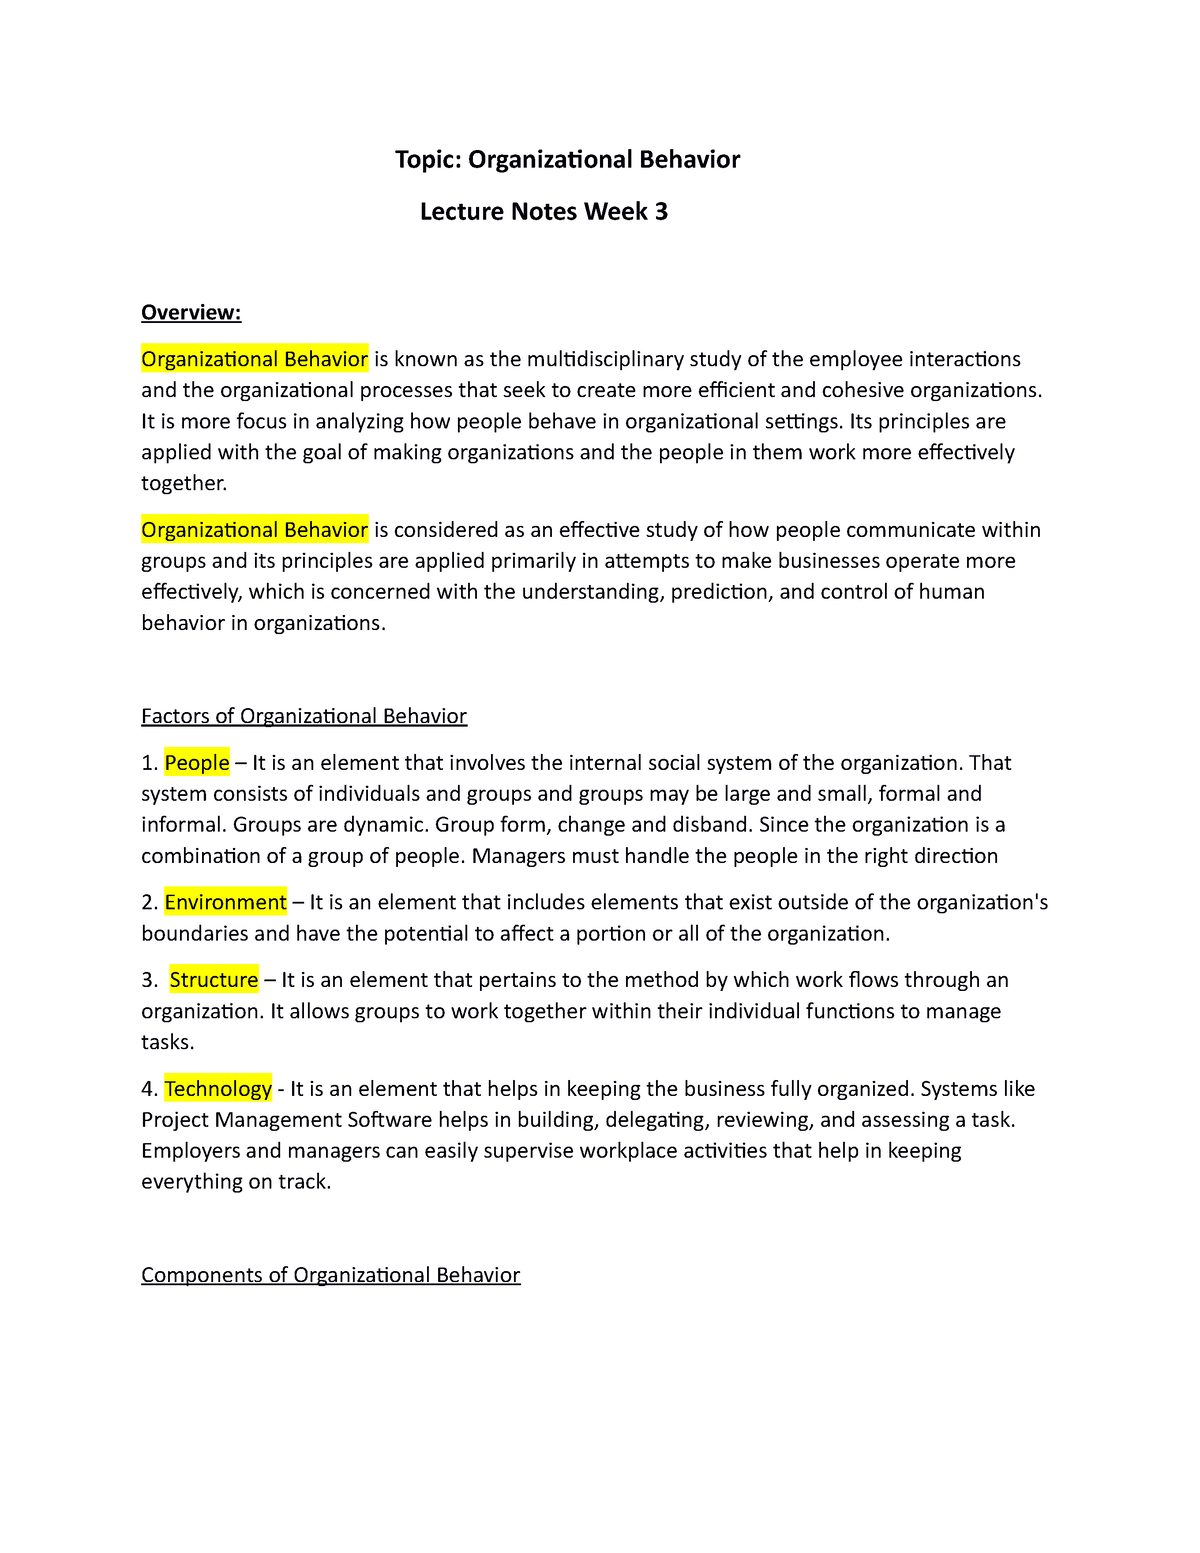 thesis topic organizational behavior